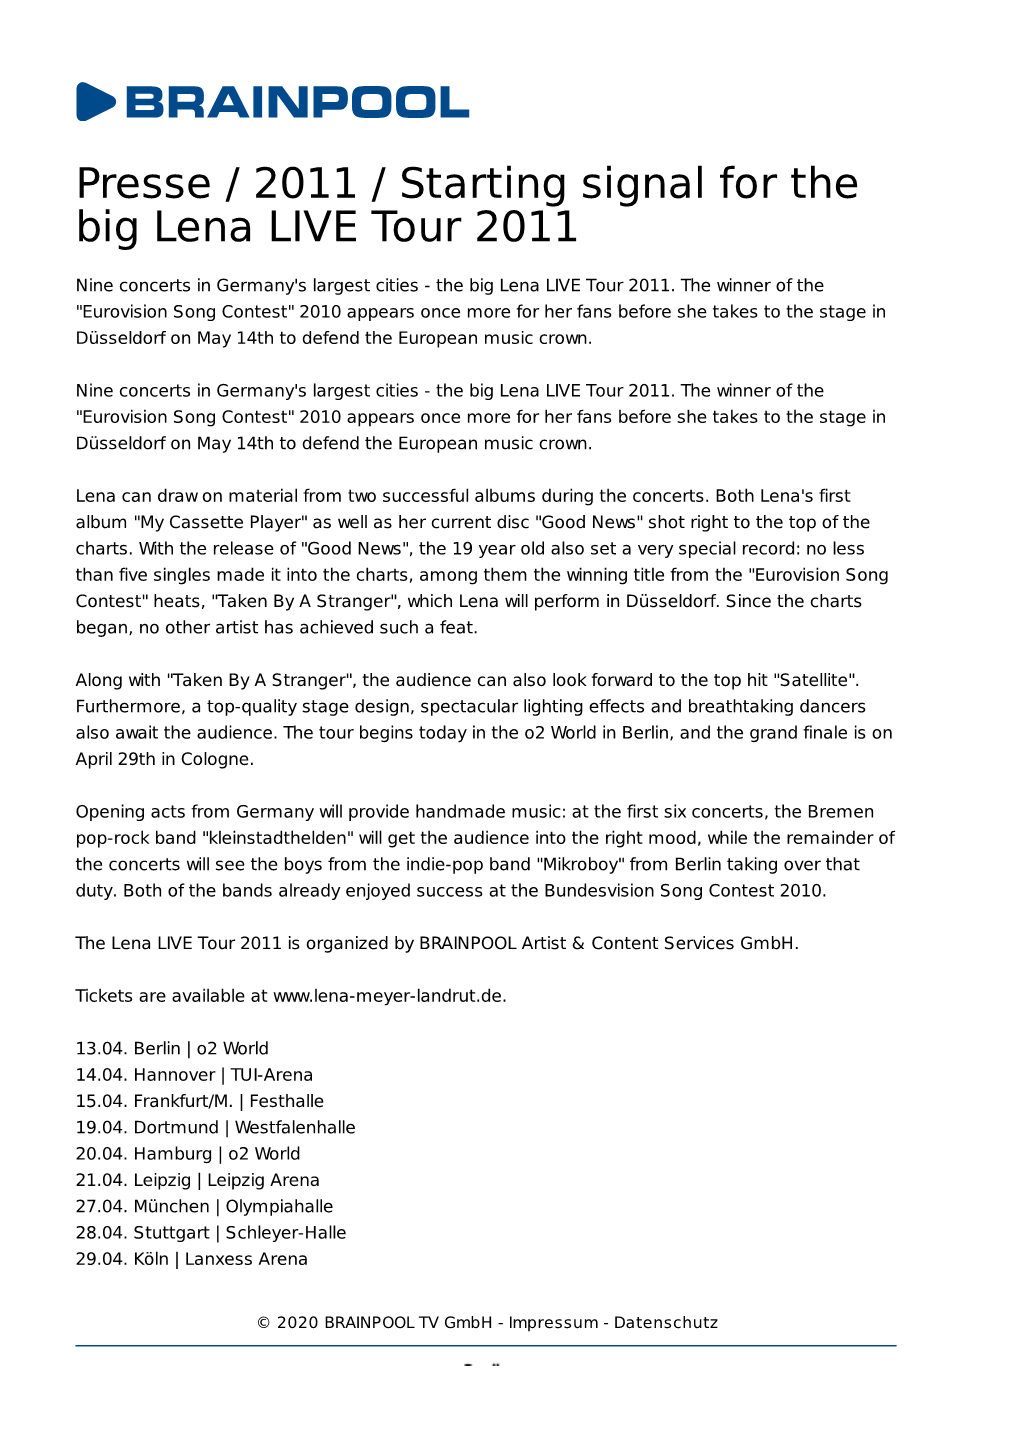 Presse / 2011 / Starting Signal for the Big Lena LIVE Tour 2011